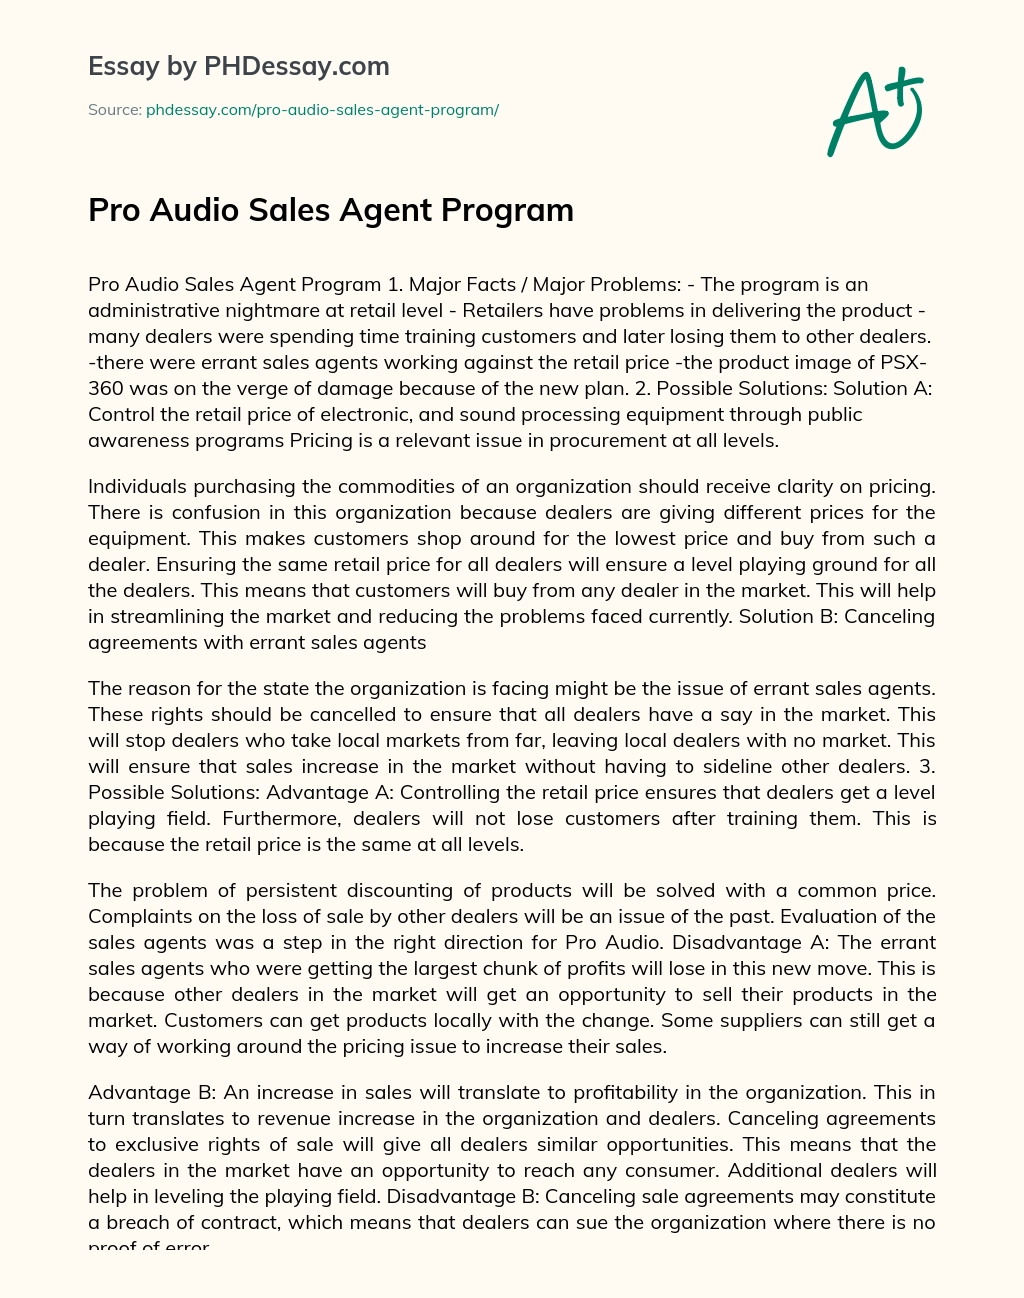 Pro Audio Sales Agent Program essay